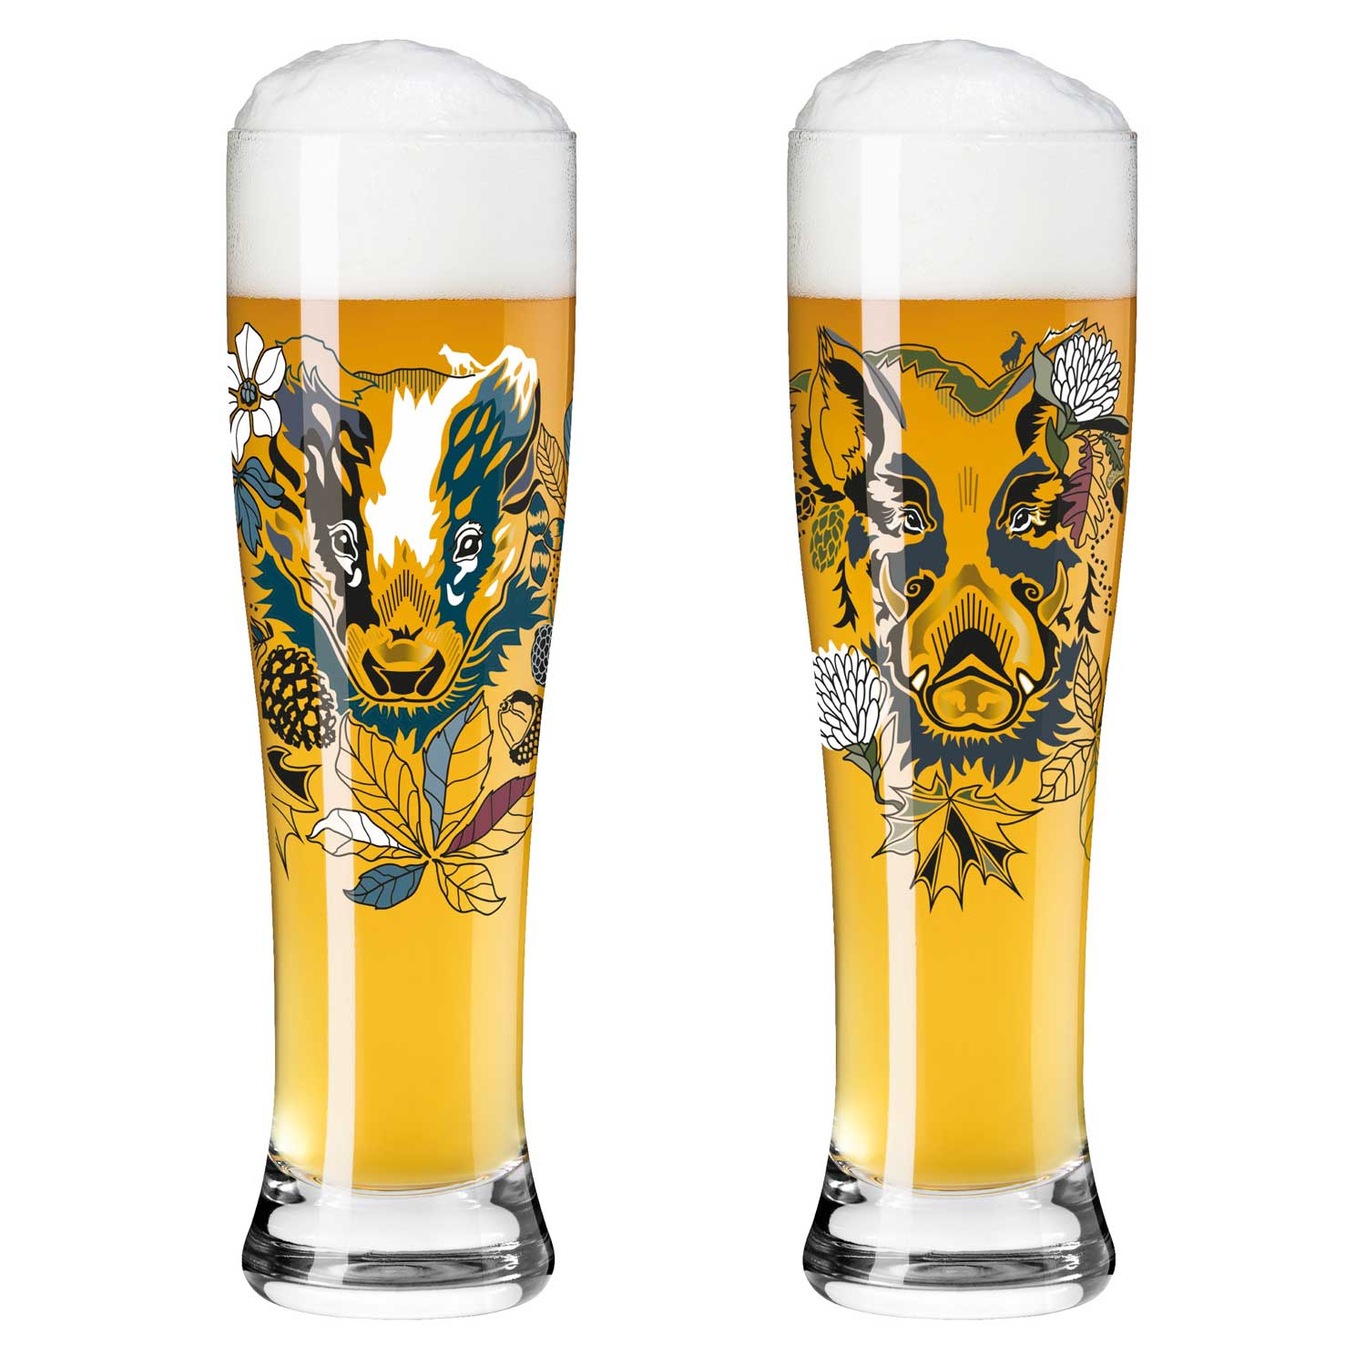 https://royaldesign.com/image/2/ritzenhoff-brauchzeit-beer-glass-no-7-8-2-p-0?w=800&quality=80